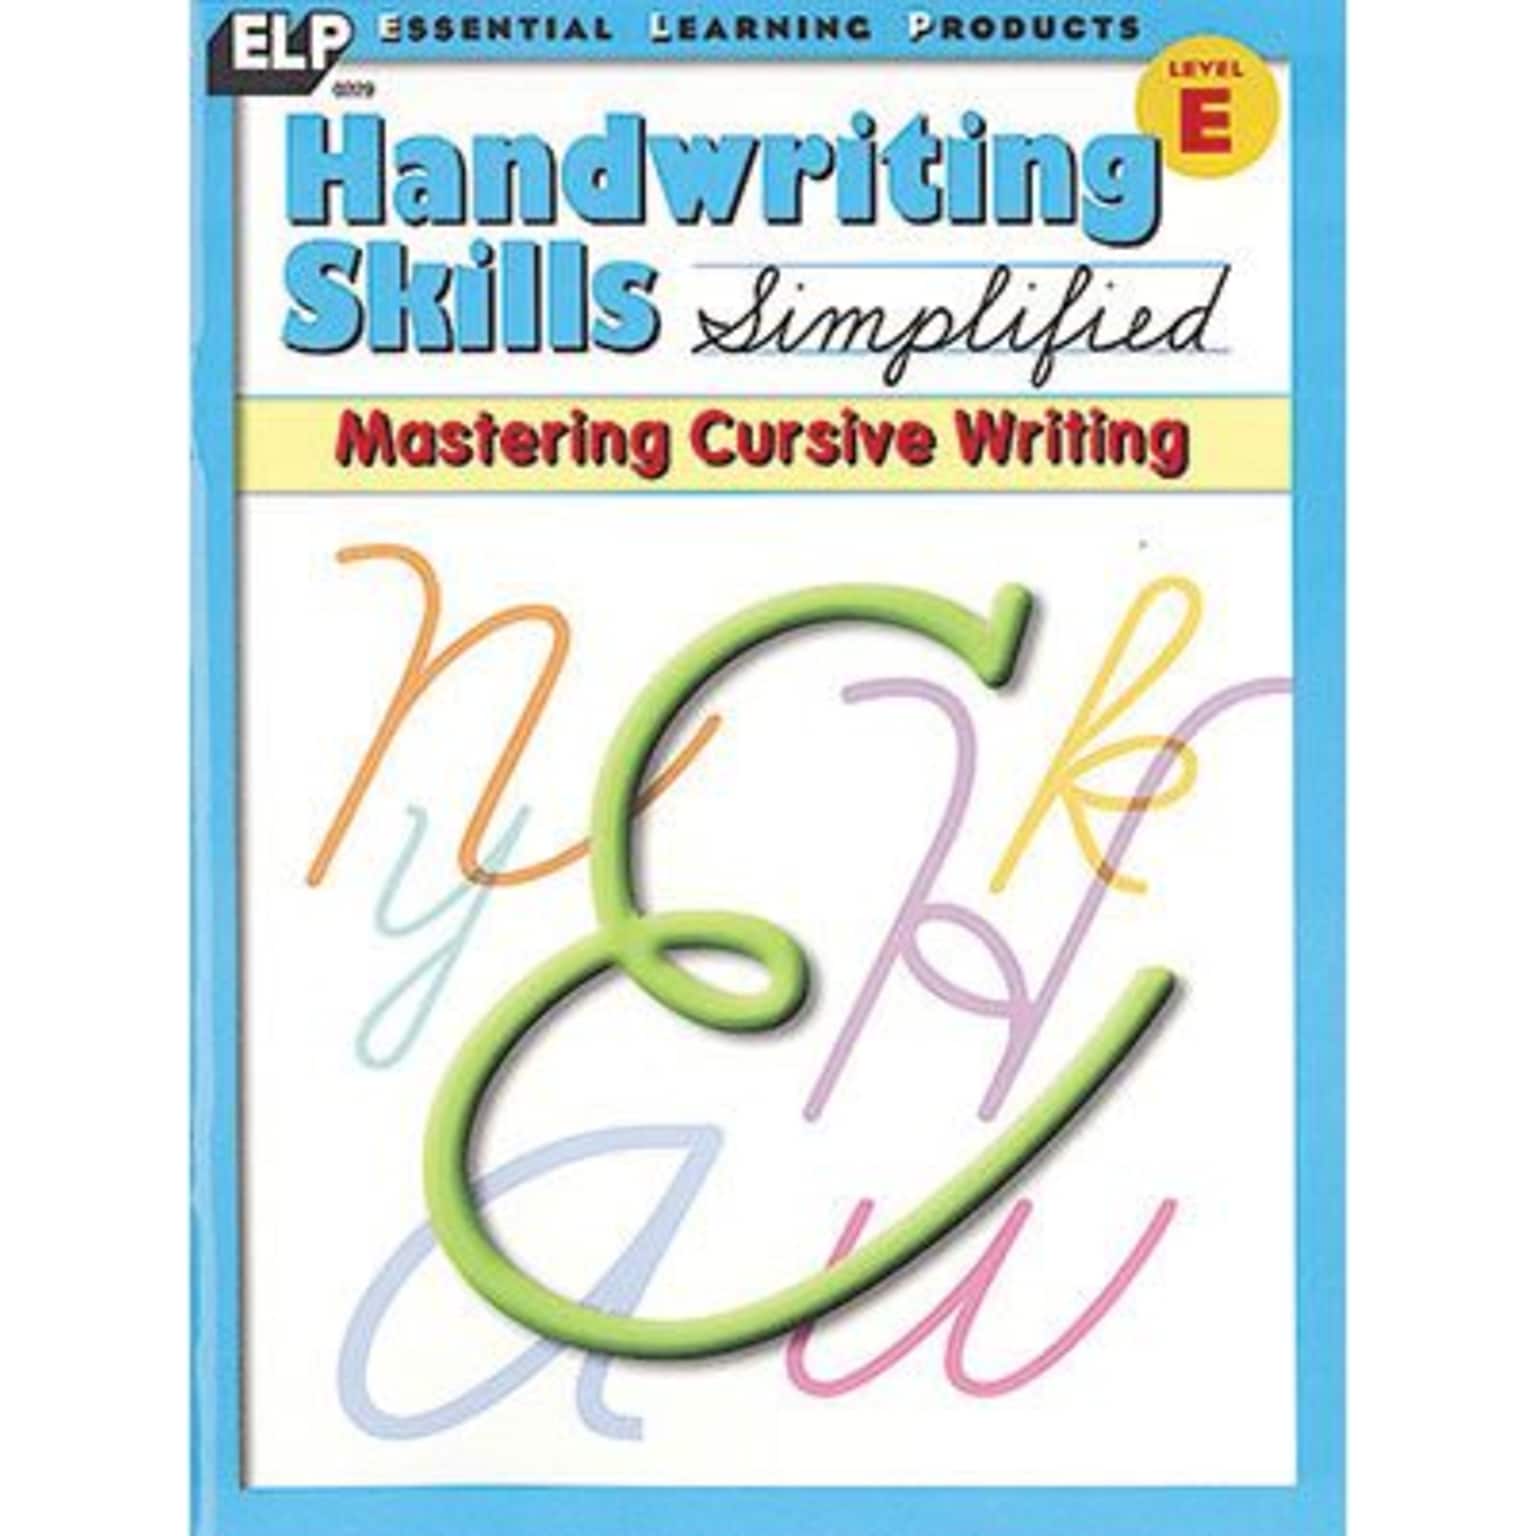 Handwriting Skills Simplified, Mastering Cursive Writing, Grade 5